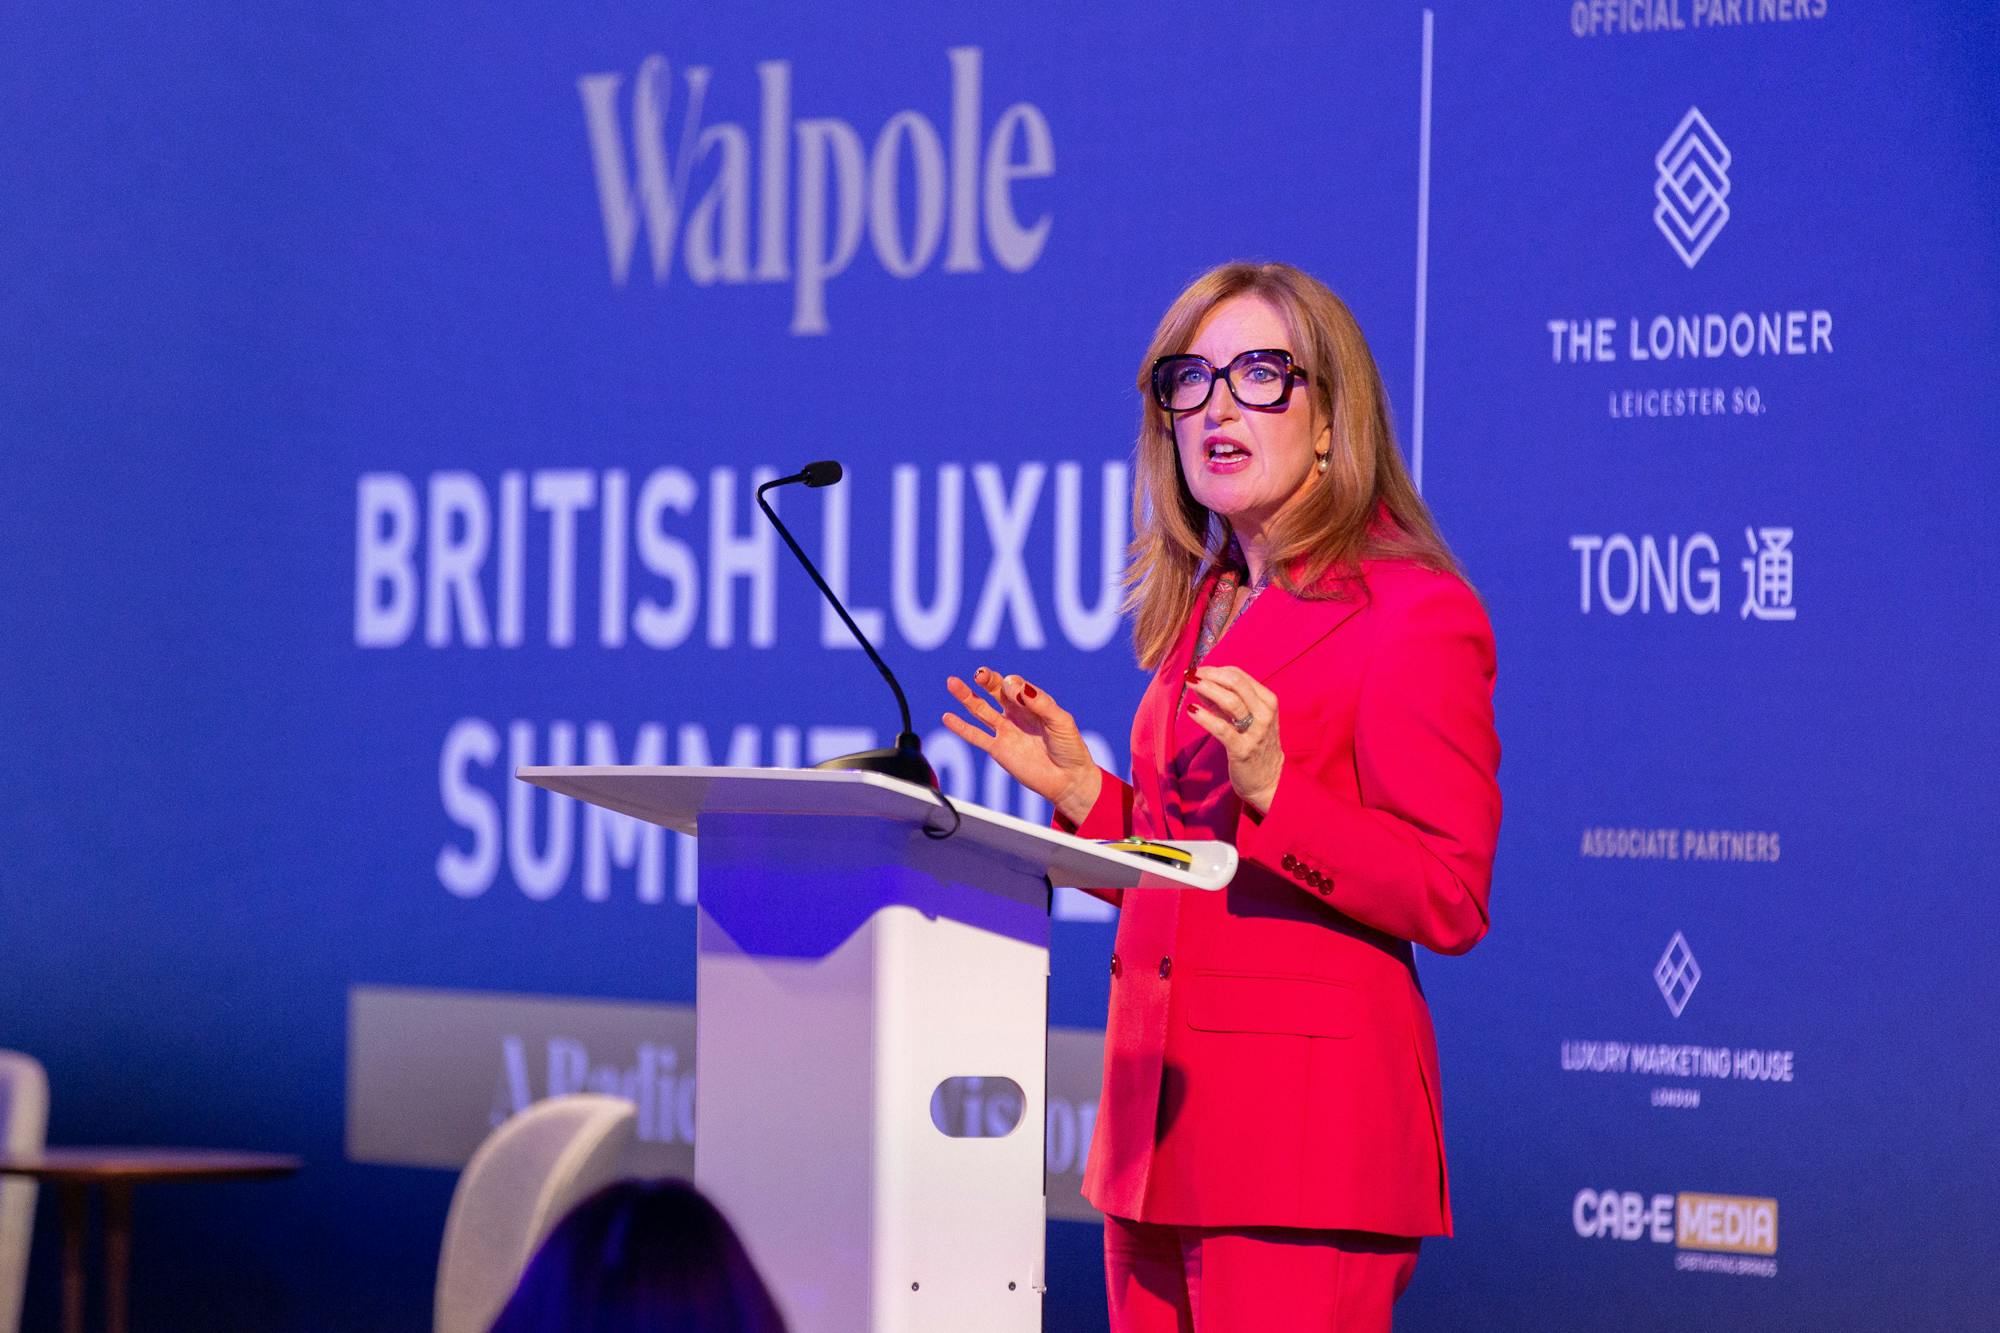 British Luxury Summit See the full agenda for the Walpole British Luxury Summit 2023 